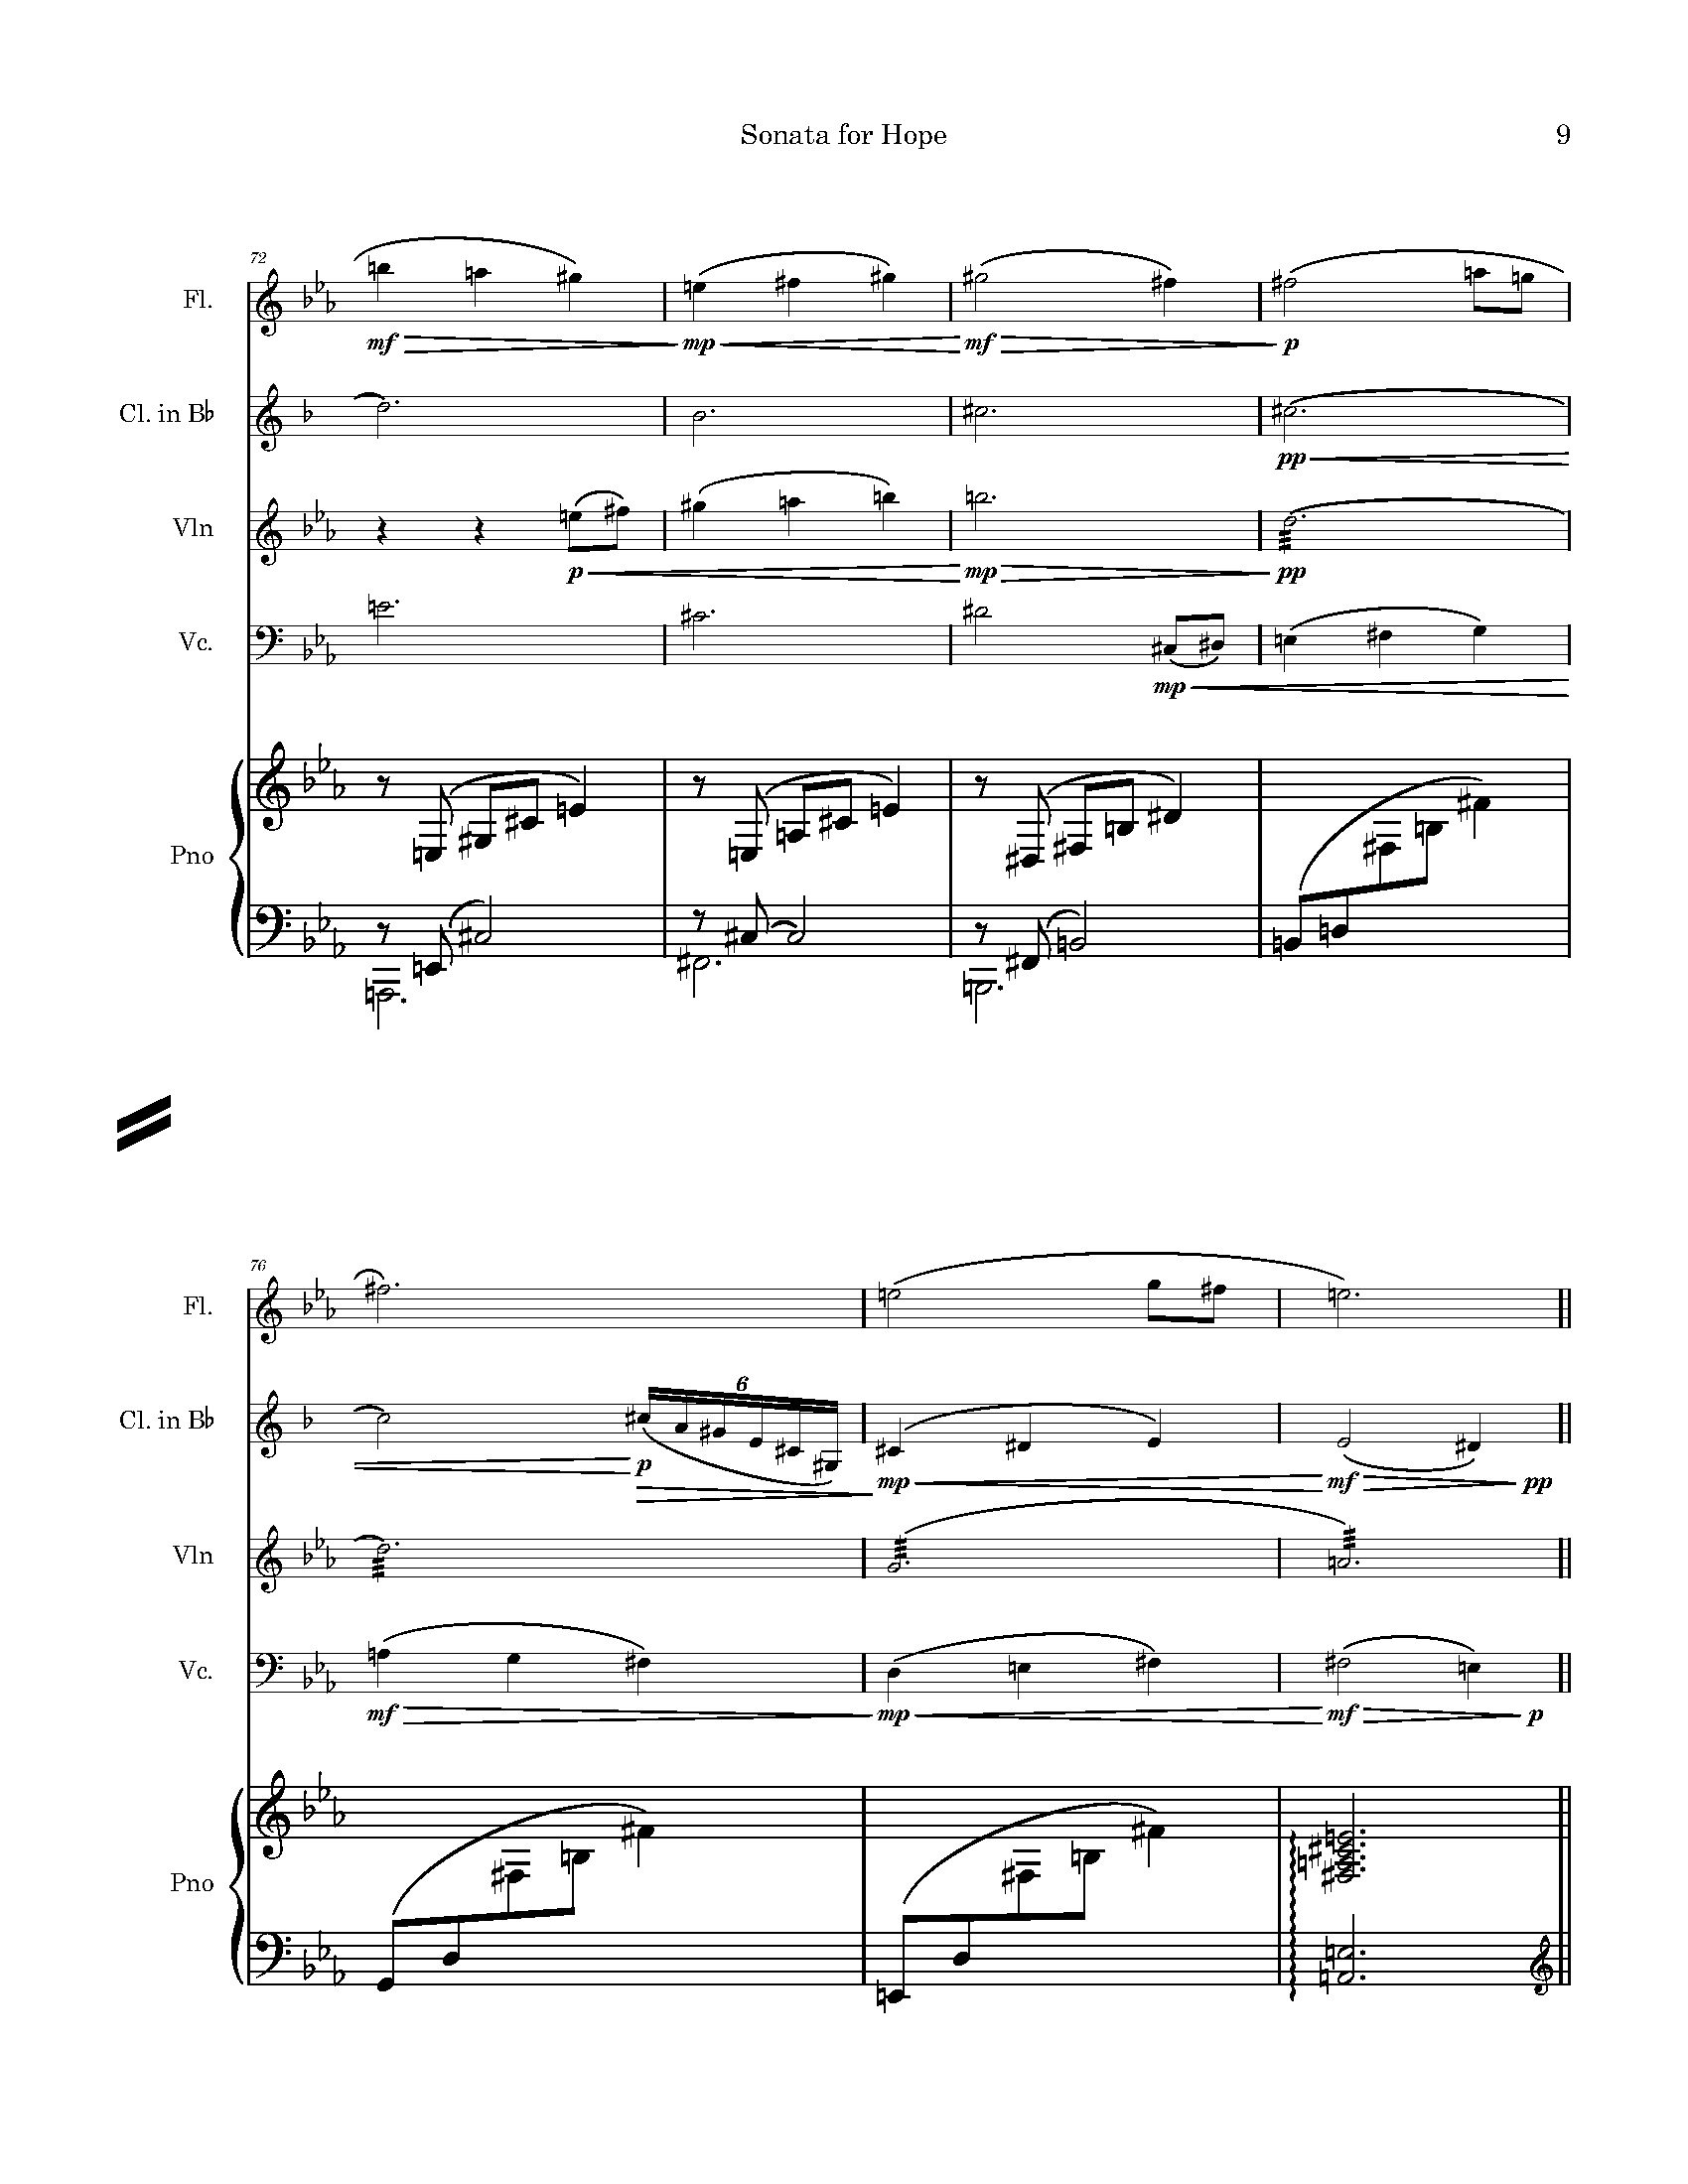 Sonata for Hope - Piano Score_Page_09.jpg